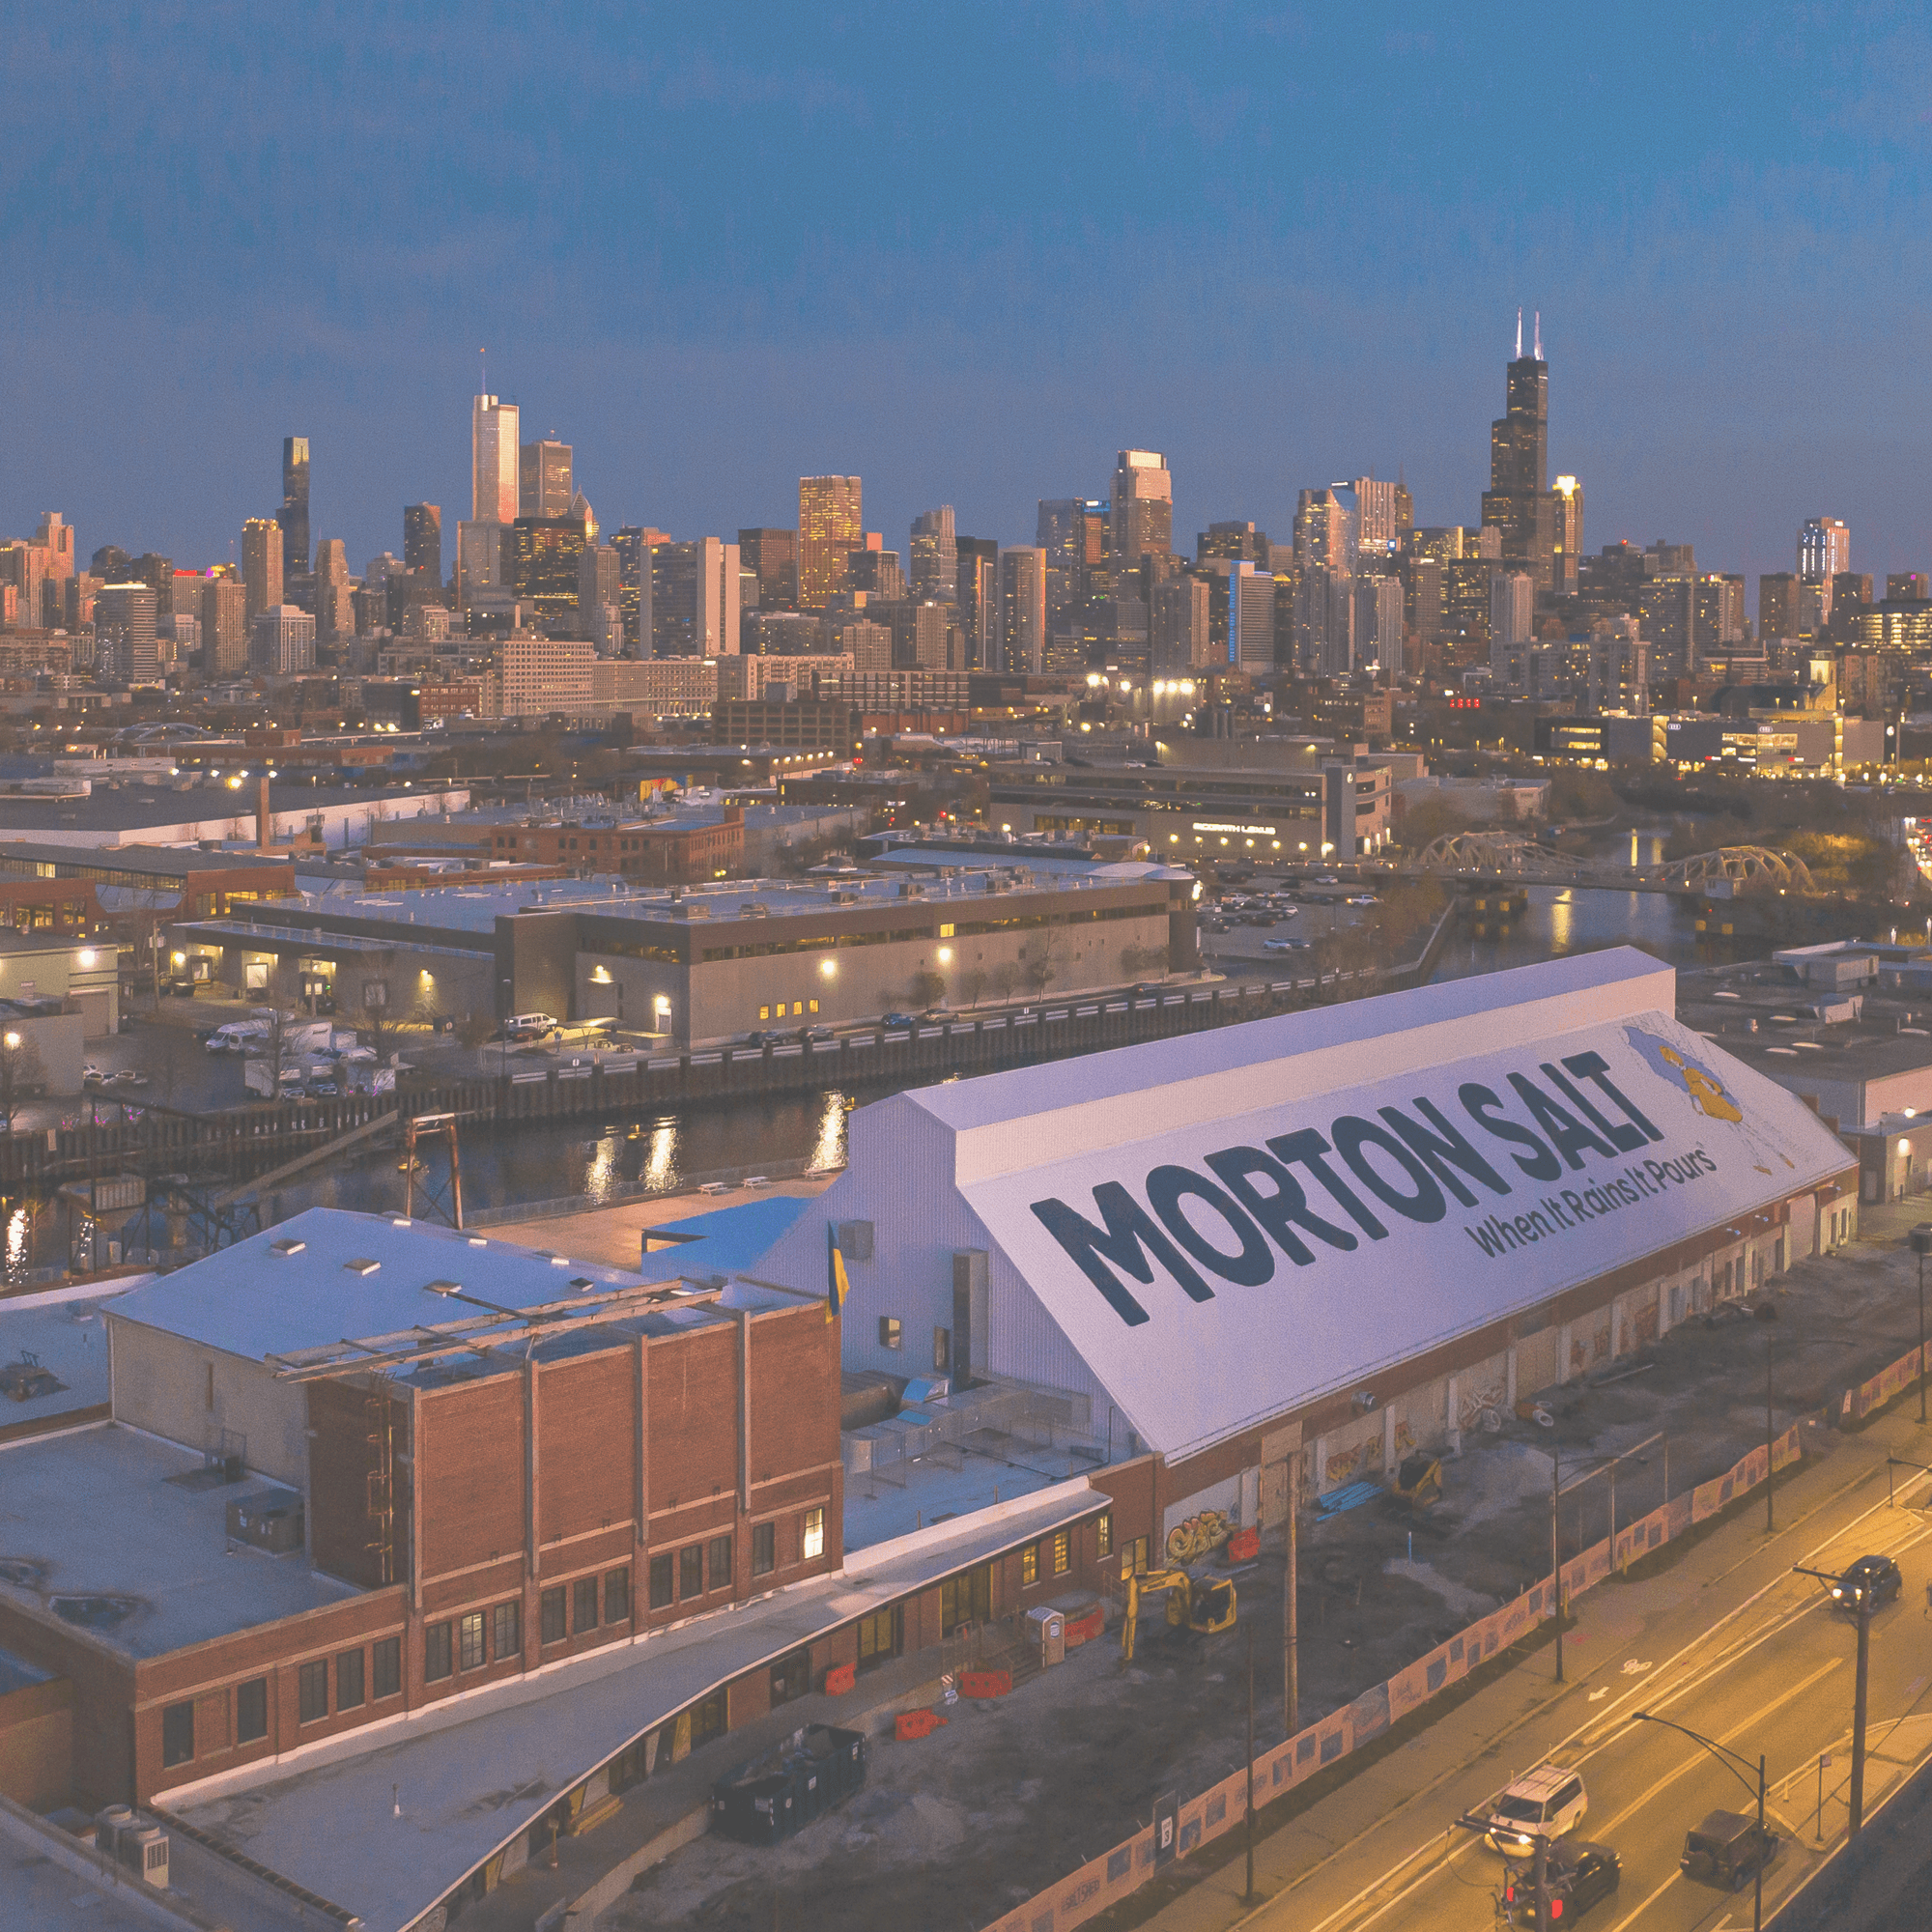 Thumbnail for "A huge transformation: Chicago's Morton Salt warehouse is a music destination".